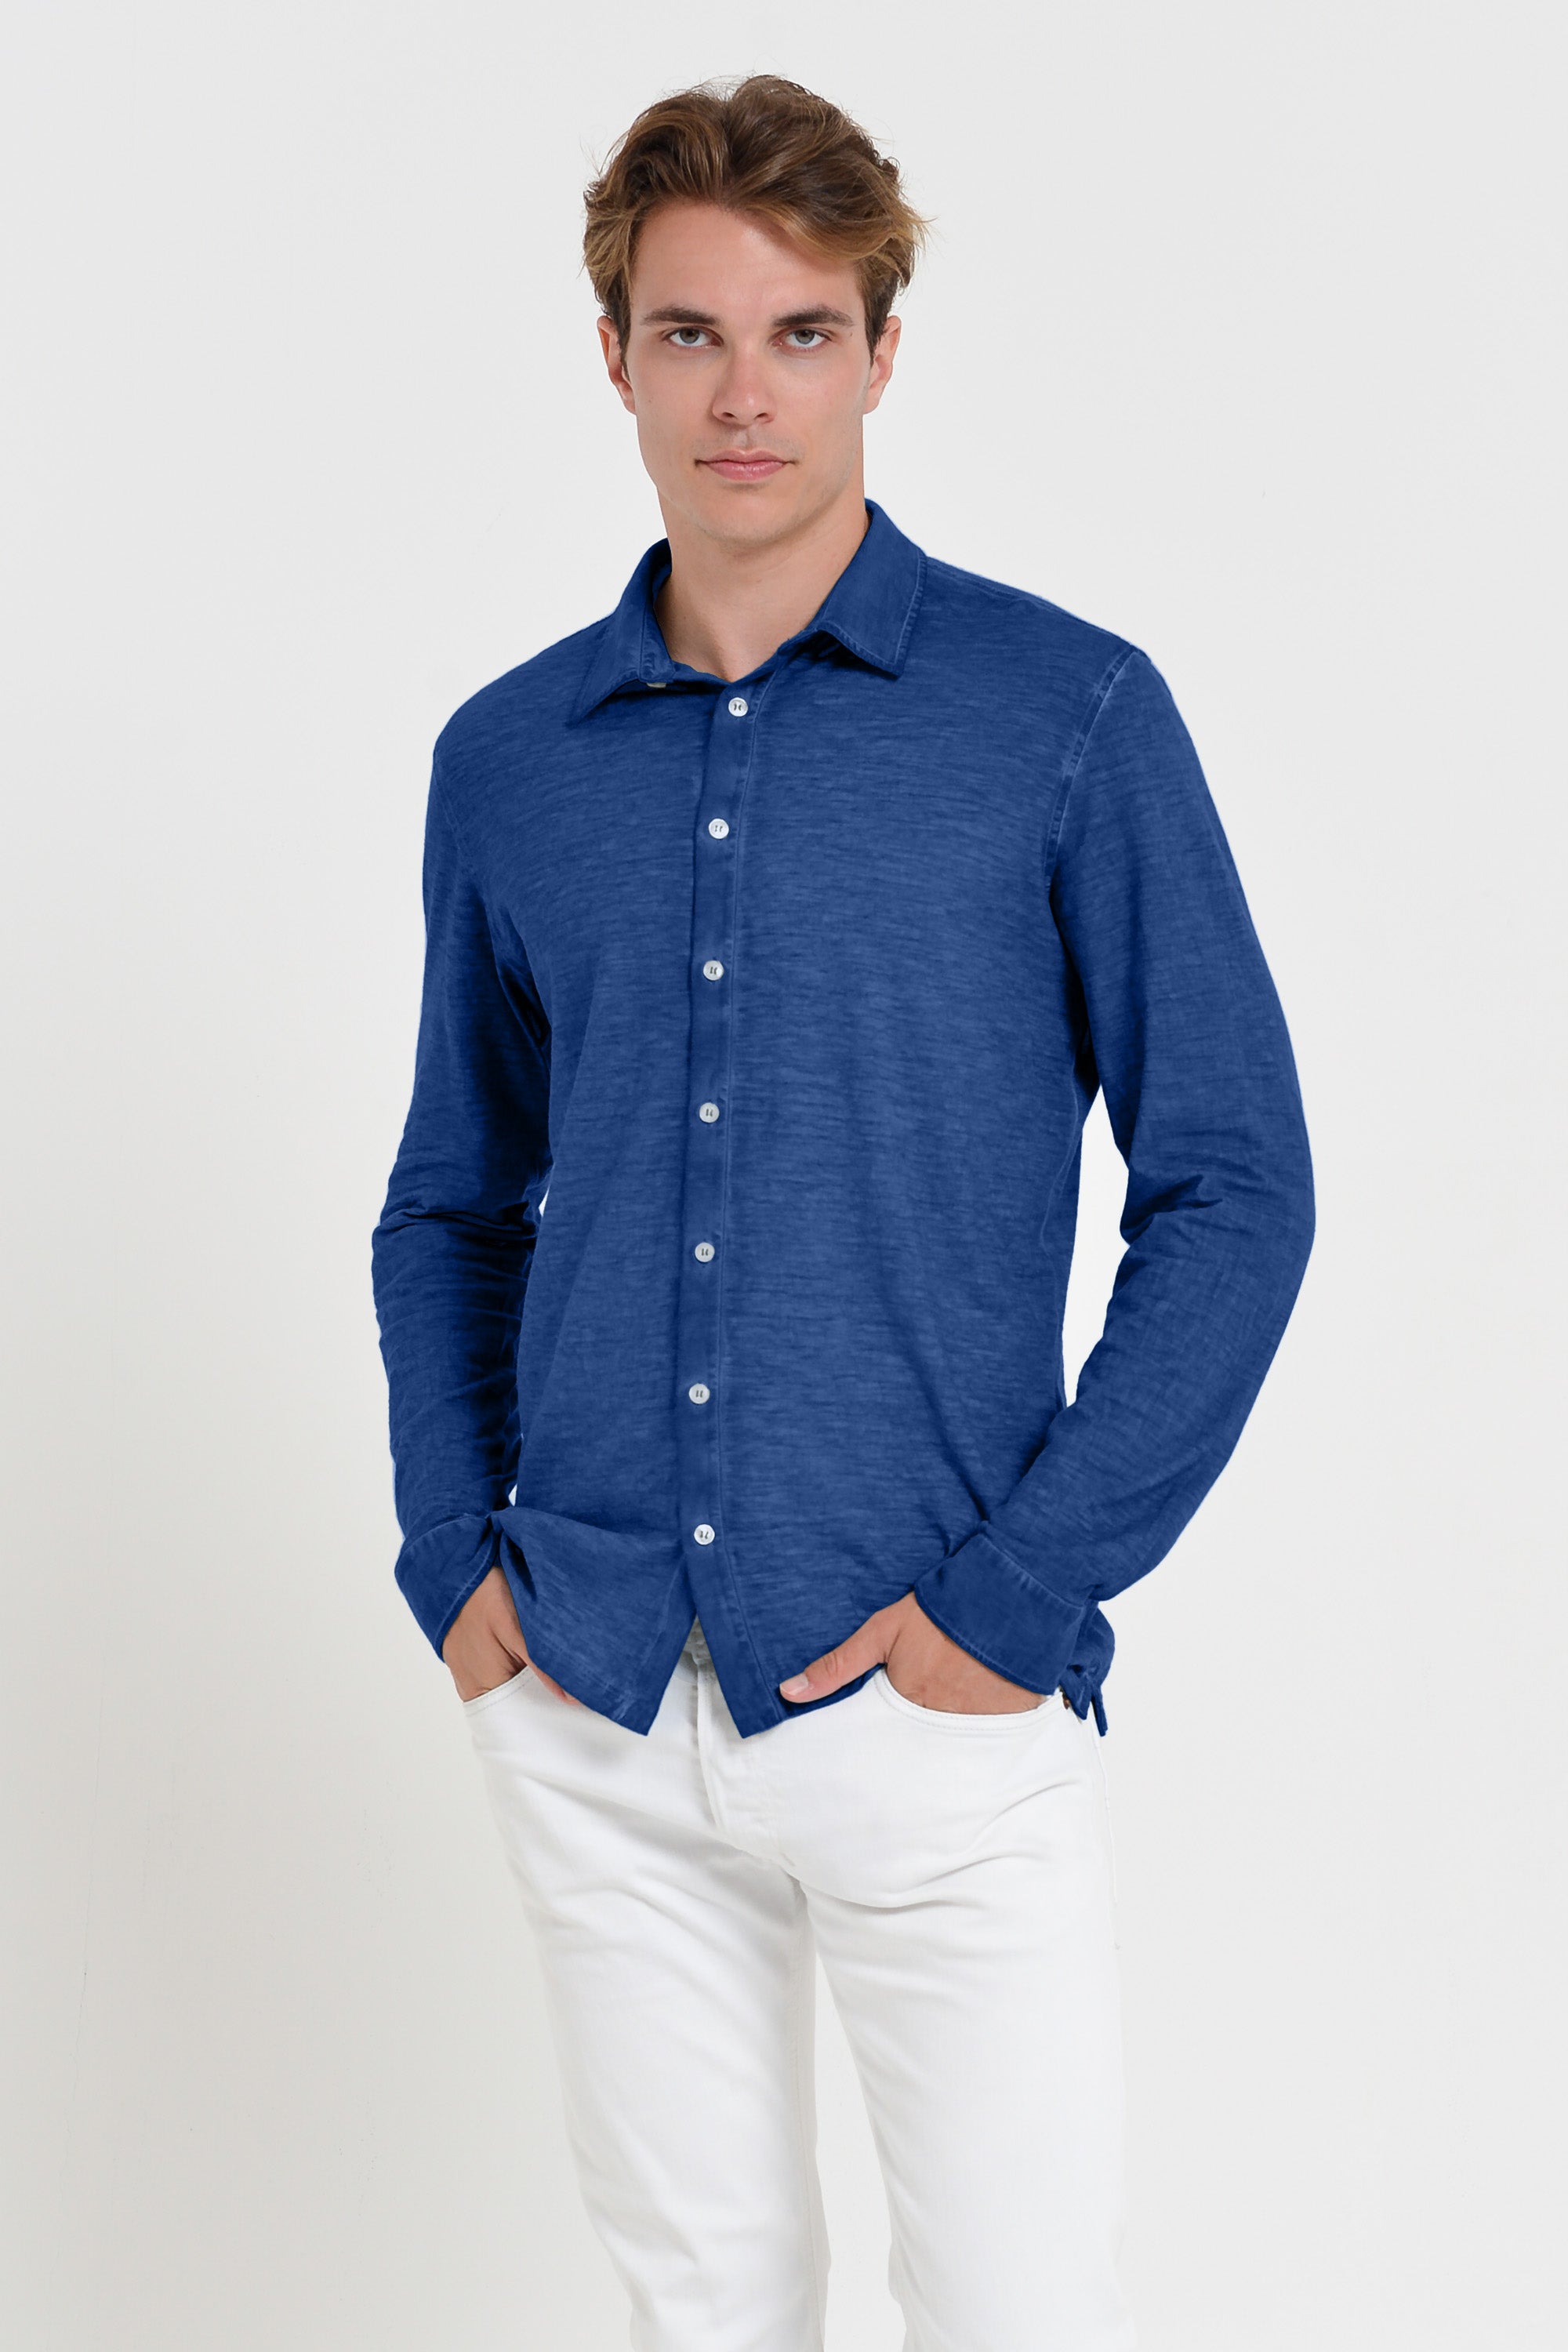 Garda Shirt - Men's Regular Fit Cotton Shirt - Pacific